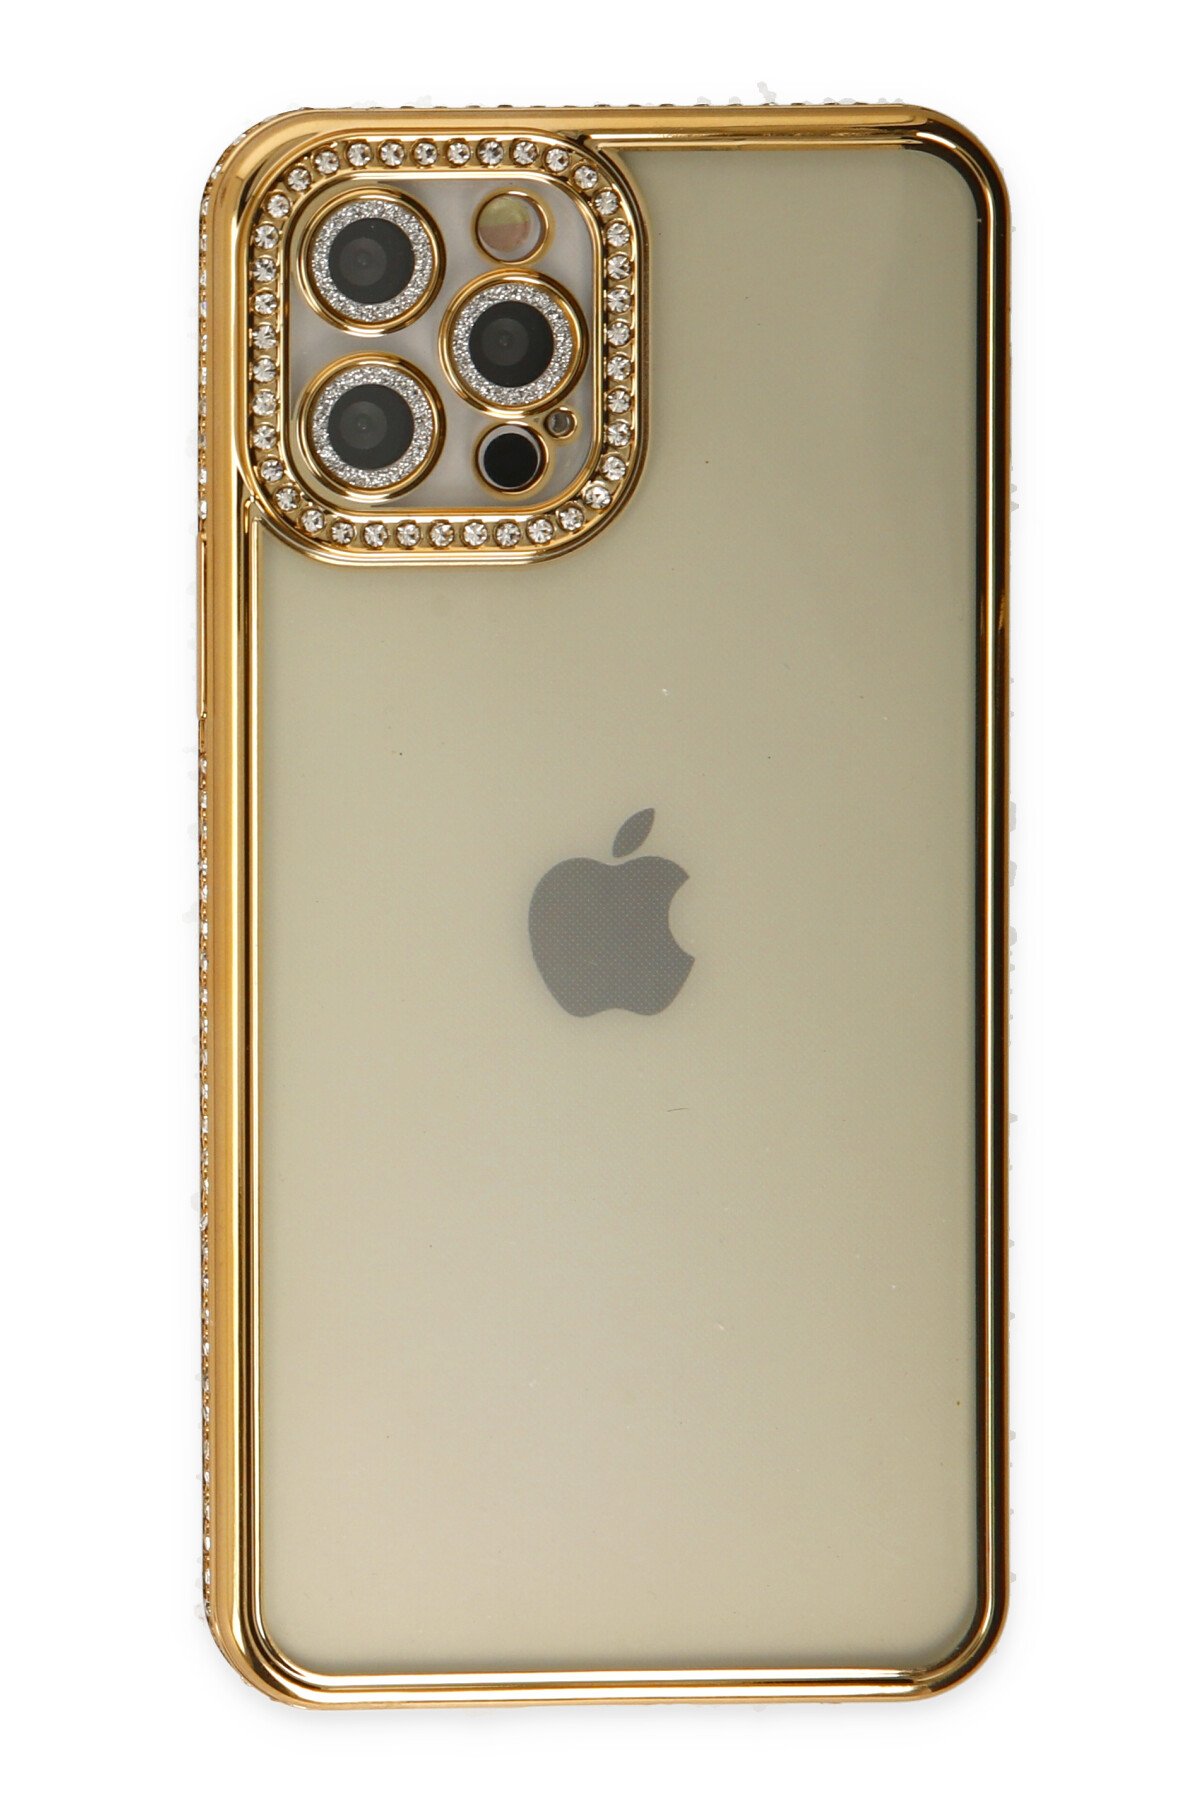 Newface iPhone 12 Pro Kılıf Lansman Glass Kapak - Siyah